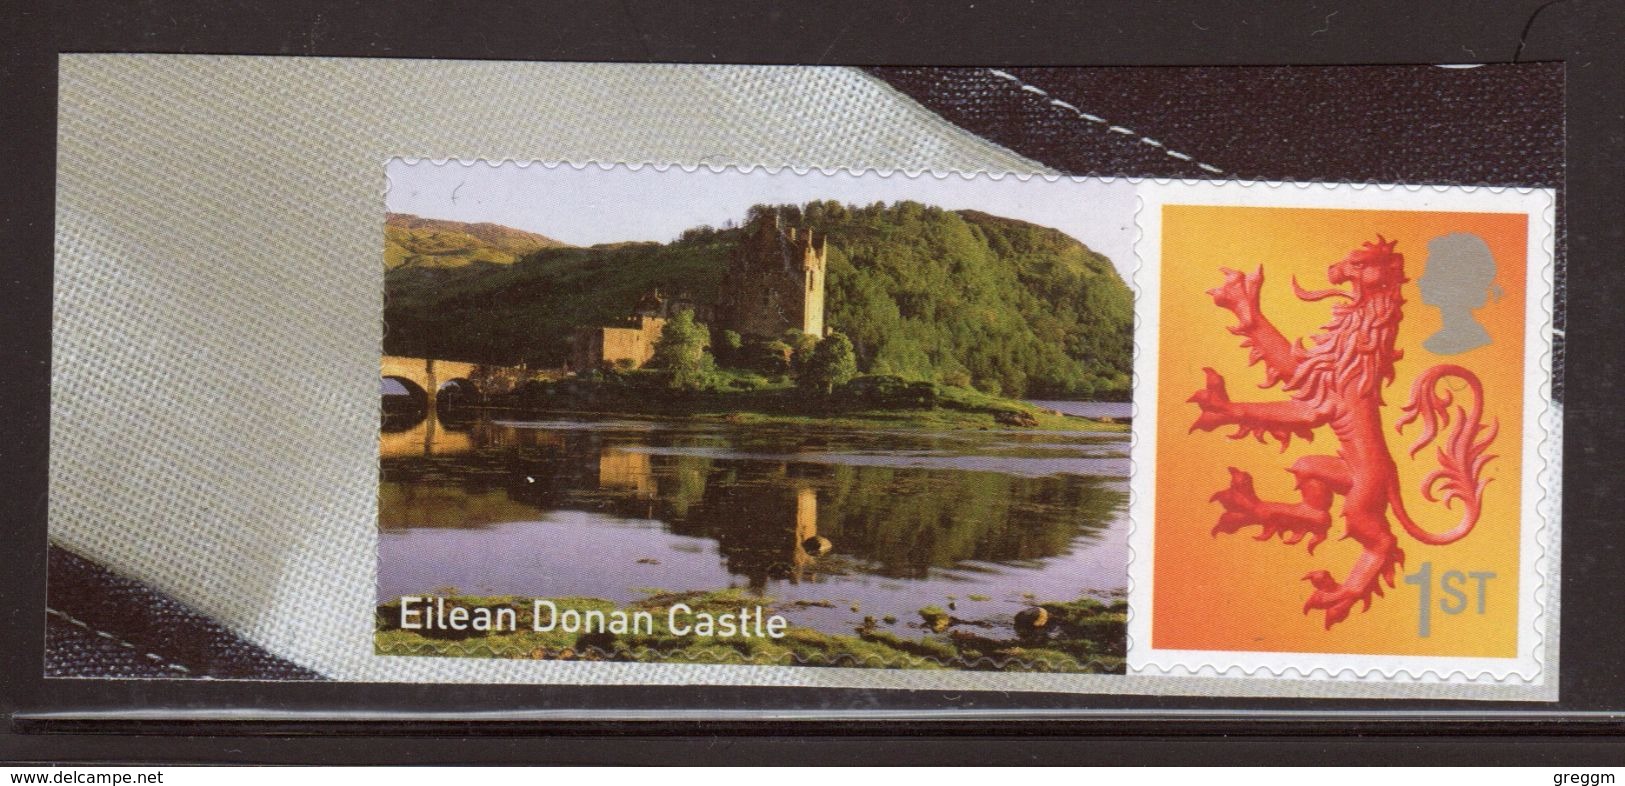 Great Britain Smiler Stamp Celebrating Glorious Scotland Eilean Donan Castle - Smilers Sheets